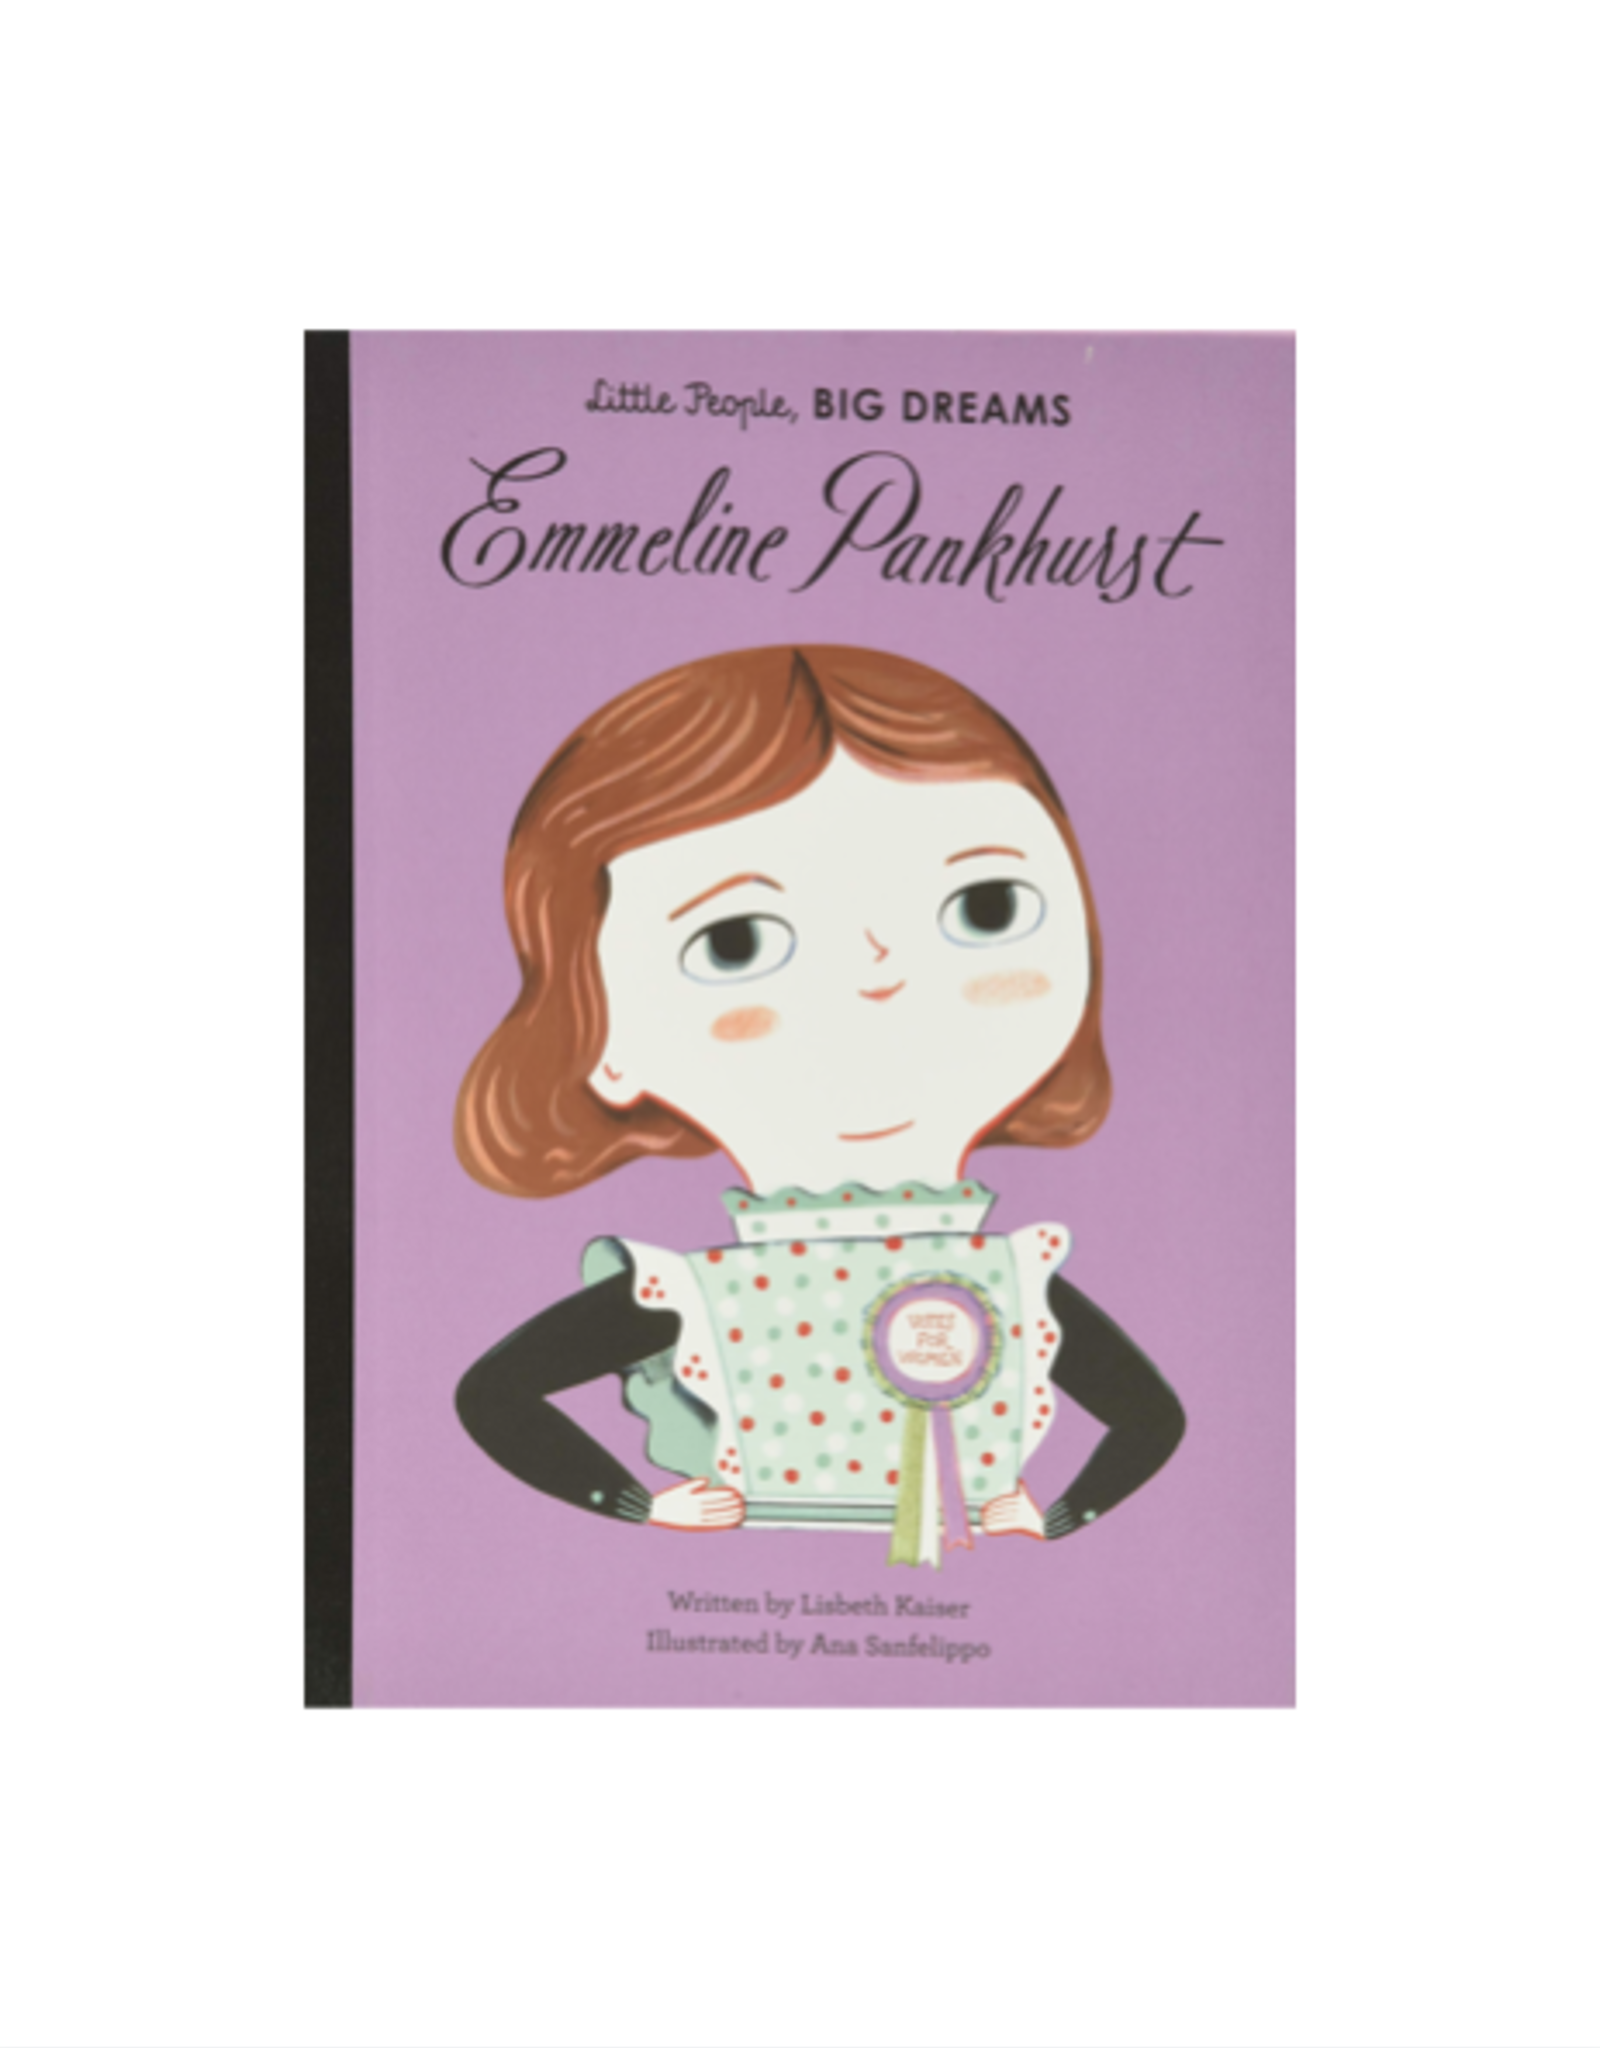 Little People, Big Dreams: Emmeline Pankhurst by: Lisbeth Kaiser